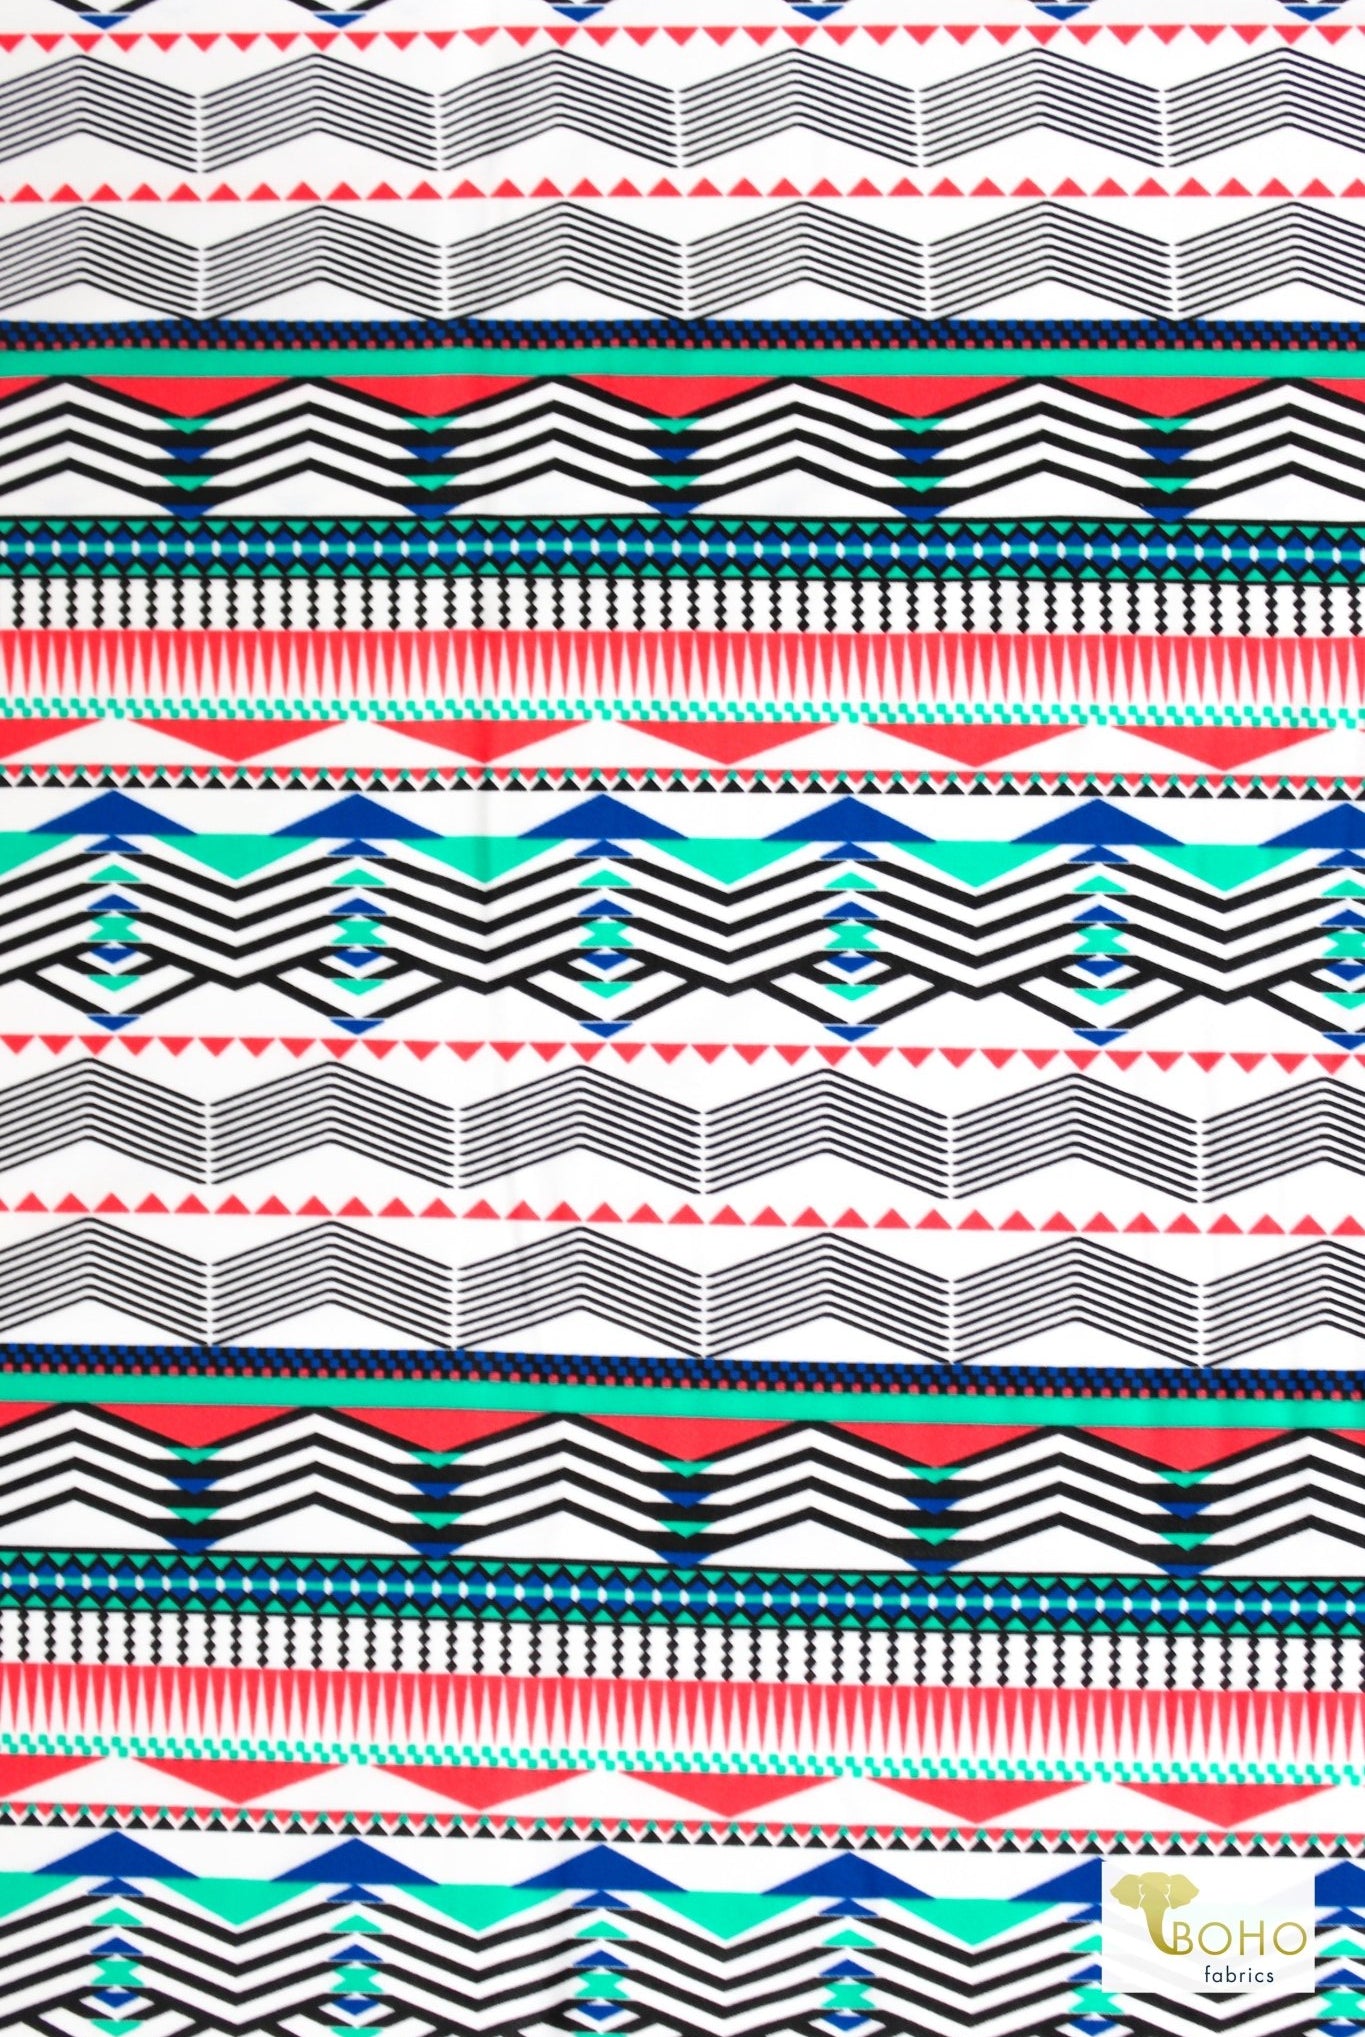 Geo Mountain Stripe, Swim/Athletic Knit Fabric - Boho Fabrics - Swim Knit, Printed Fabric